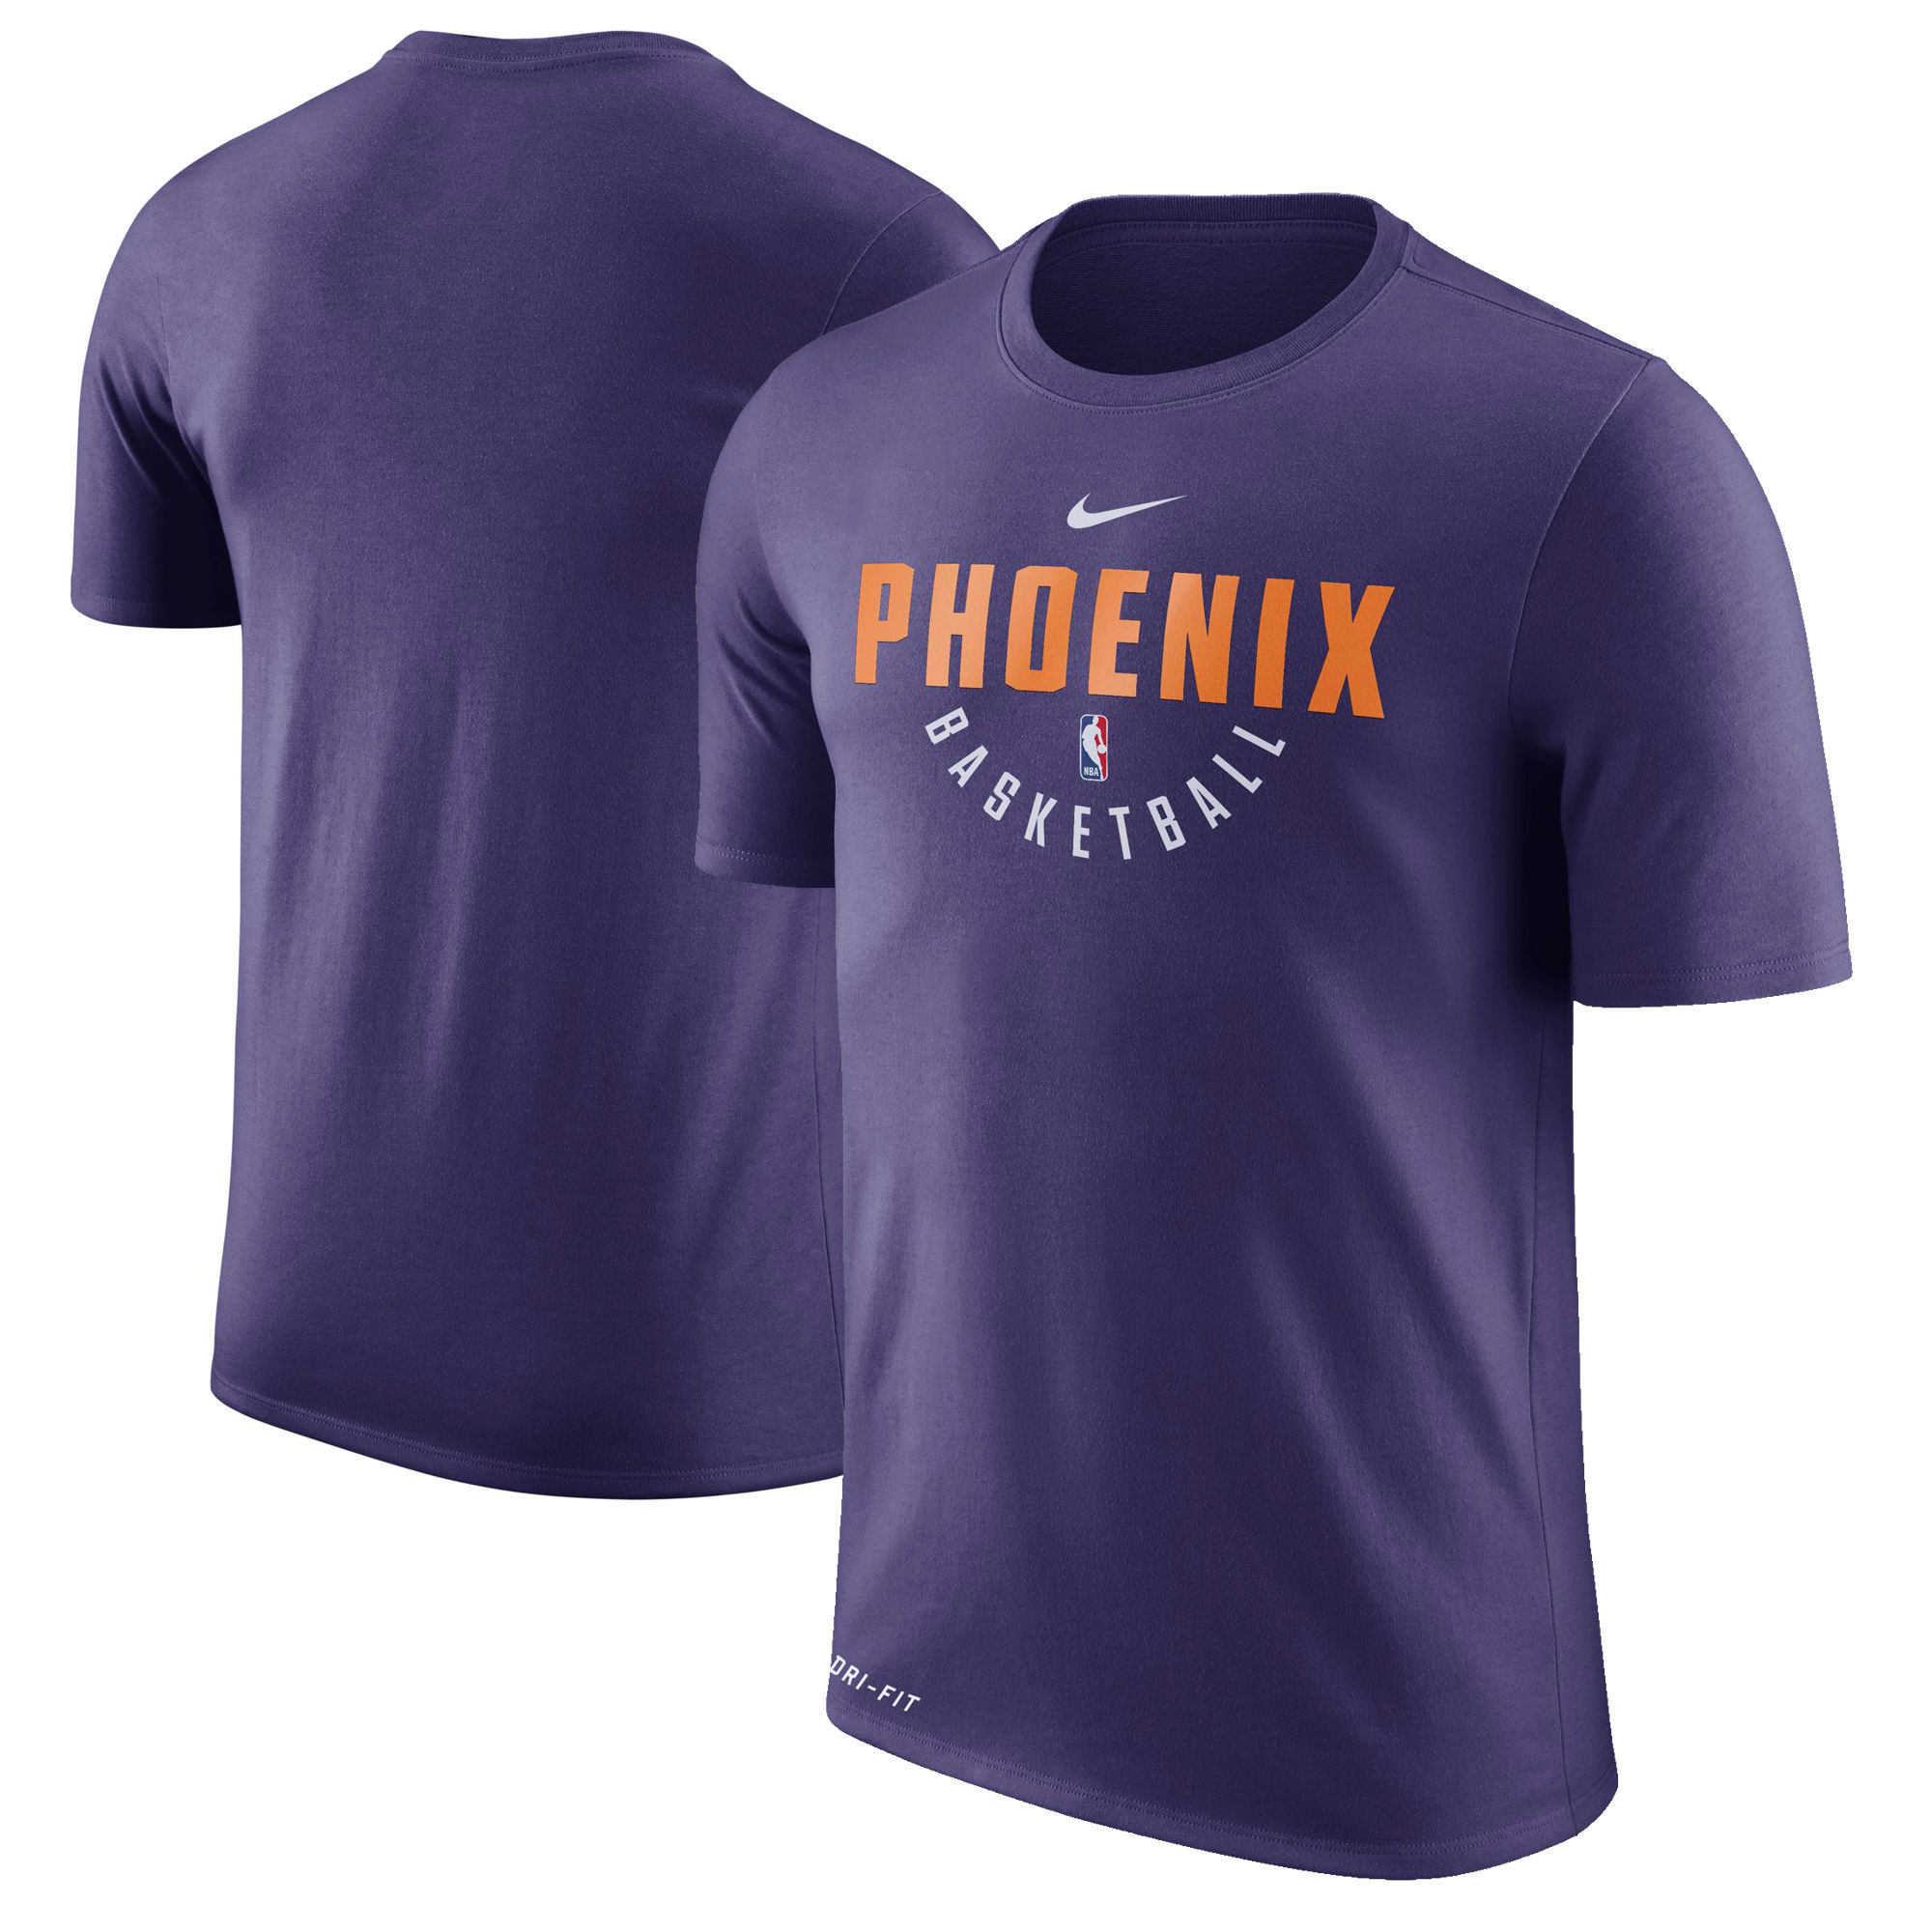 Phoenix Suns Nike Practice Performance T-Shirt Purple